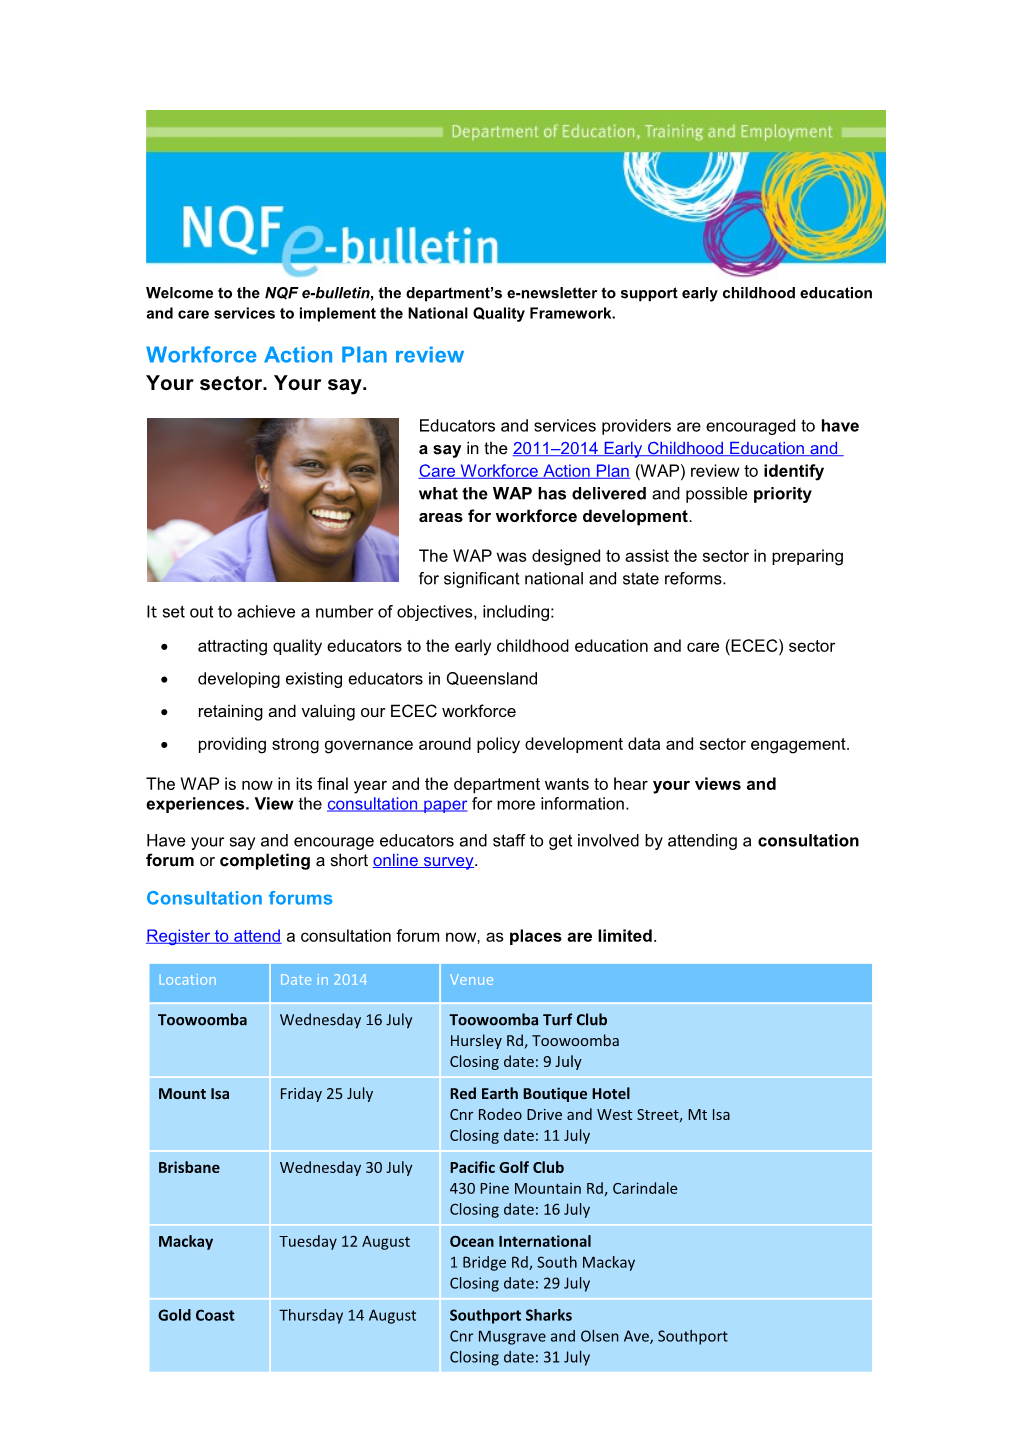 NQF E-Bulletin - Workforce Action Plan Review